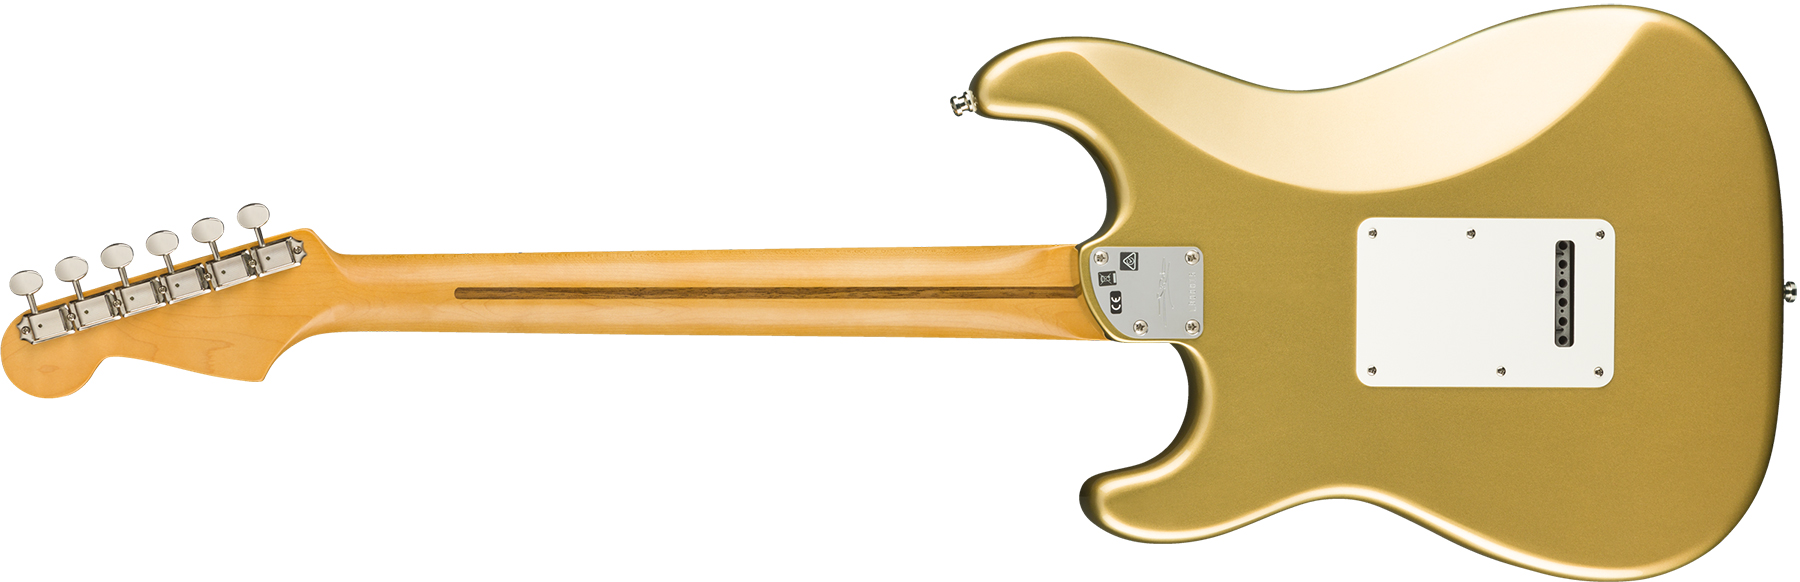 Fender Strat Lincoln Brewster Usa Signature Mn - Aztec Gold - Str shape electric guitar - Variation 1